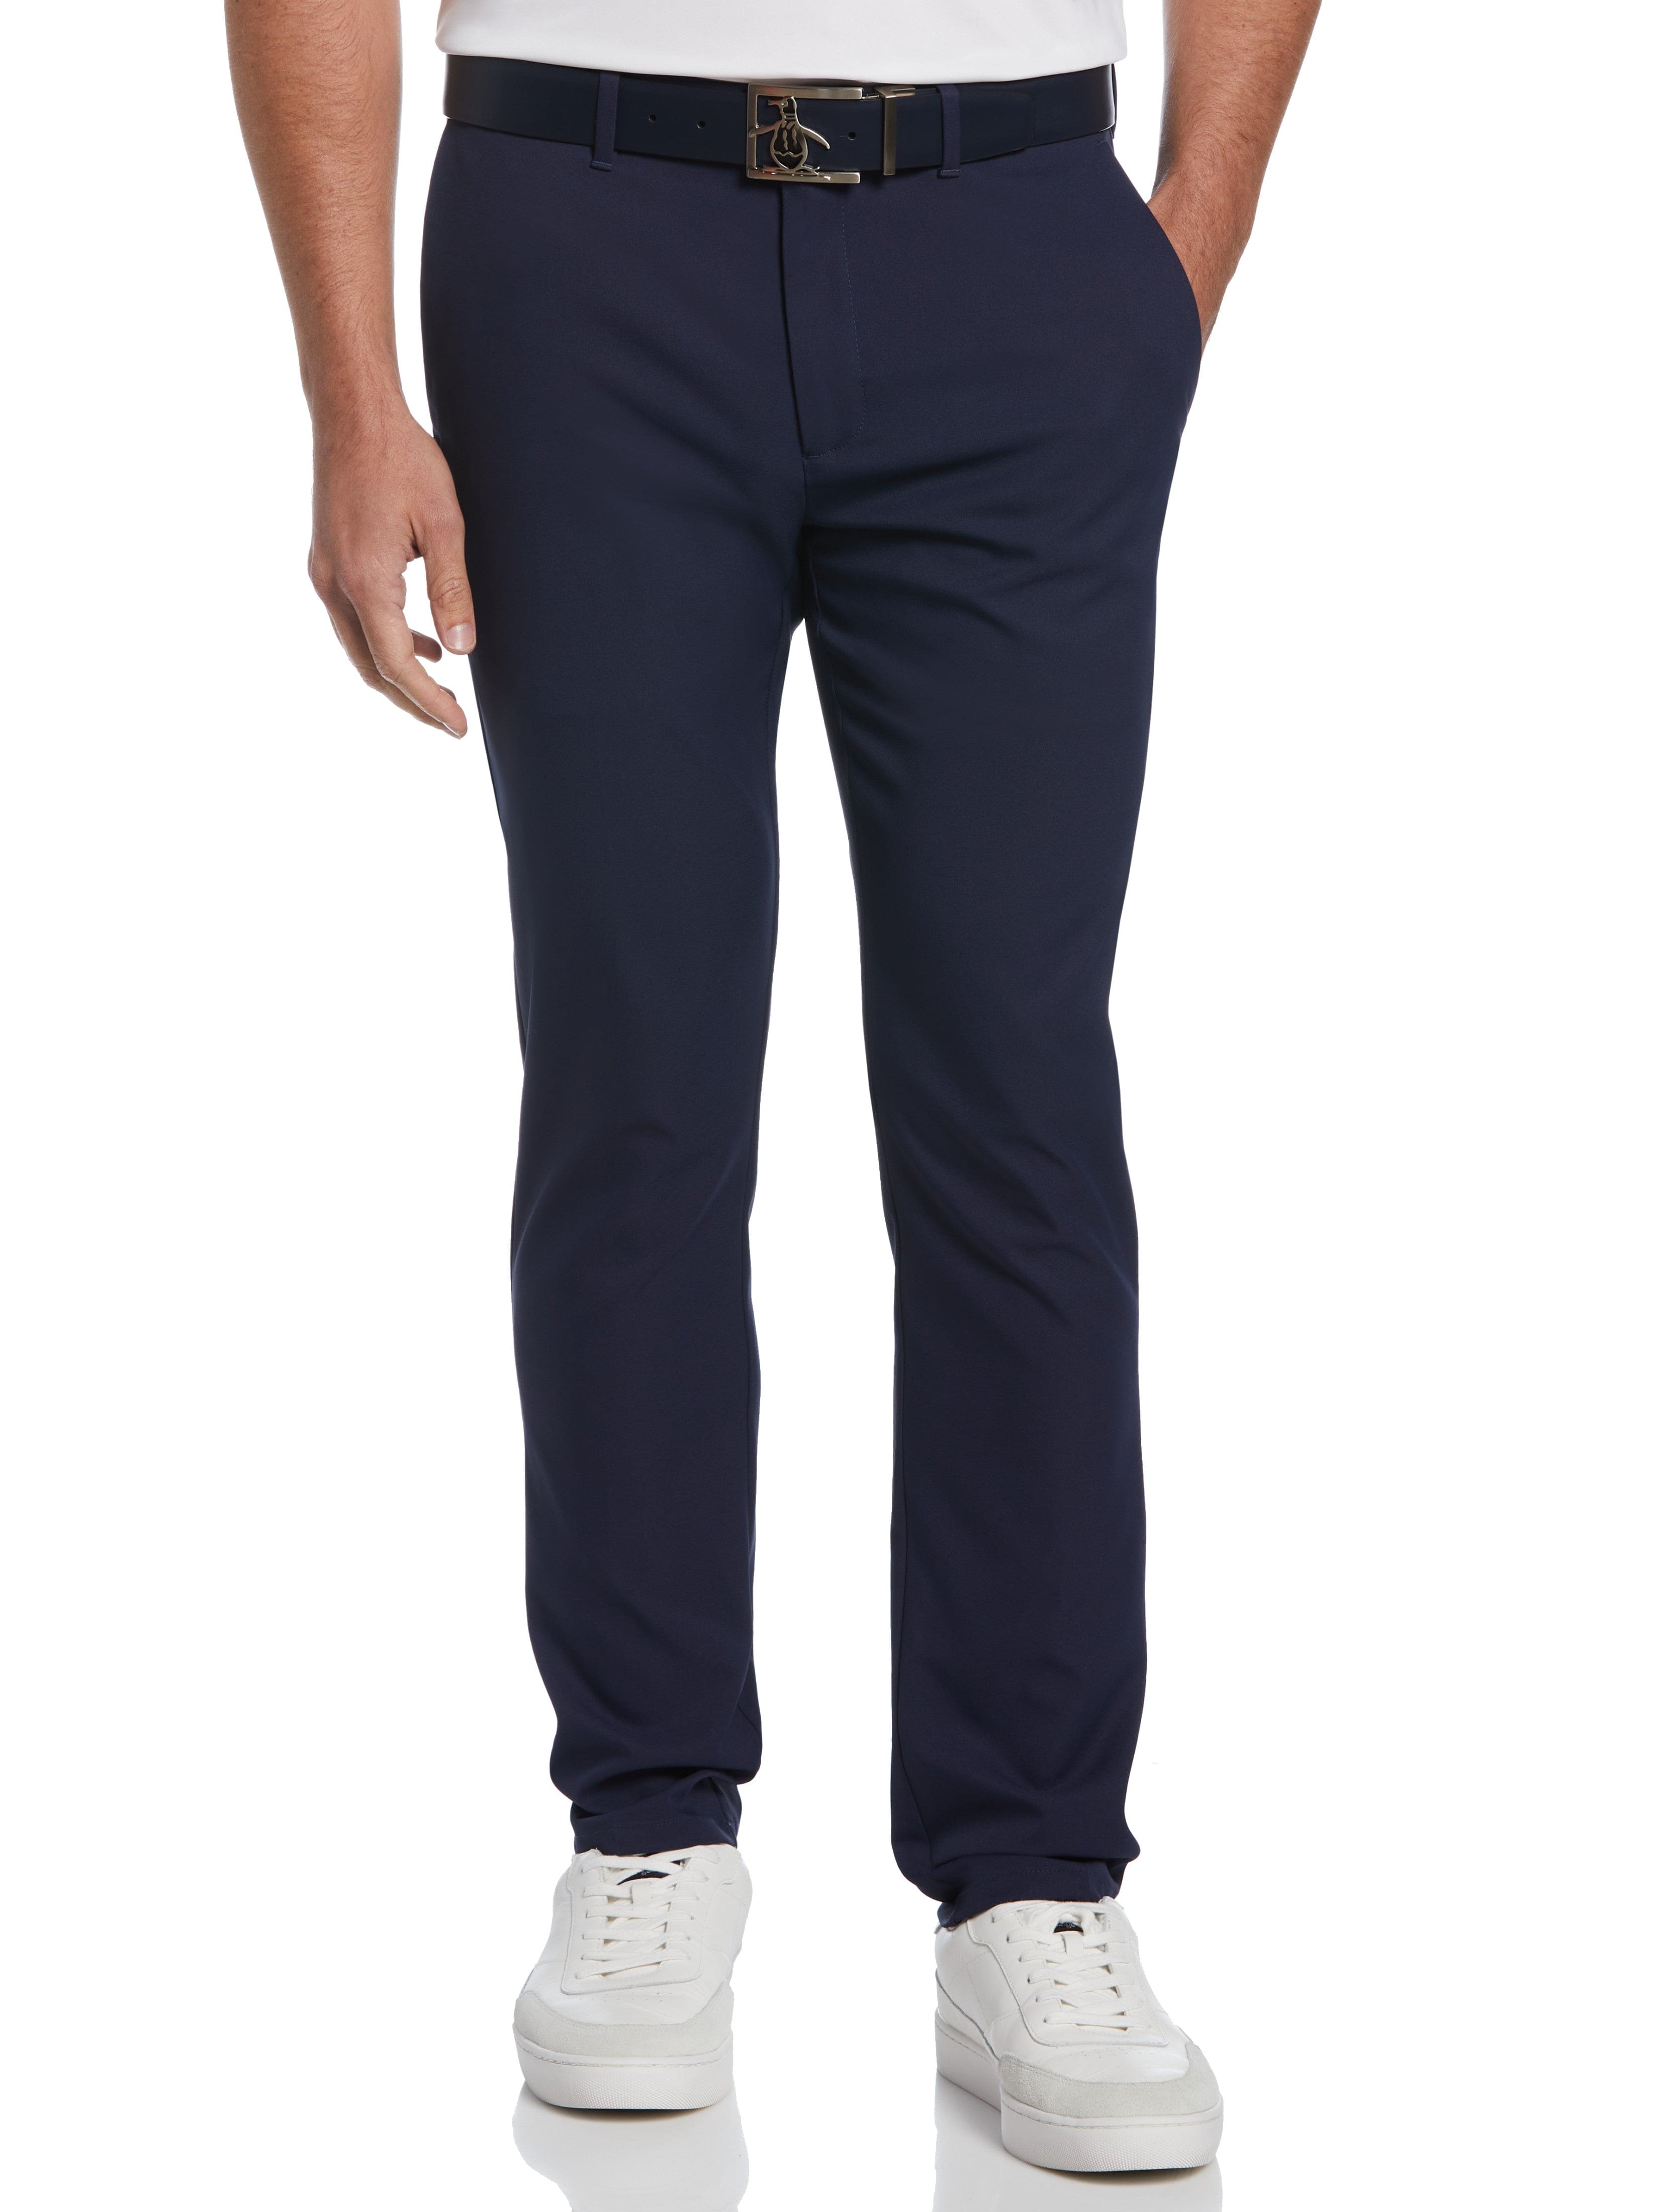 Original Penguin Mens Flat Front Solid Golf Pants, Size 34 x 32, Dark Navy Blue, 100% Polyester | Golf Apparel Shop